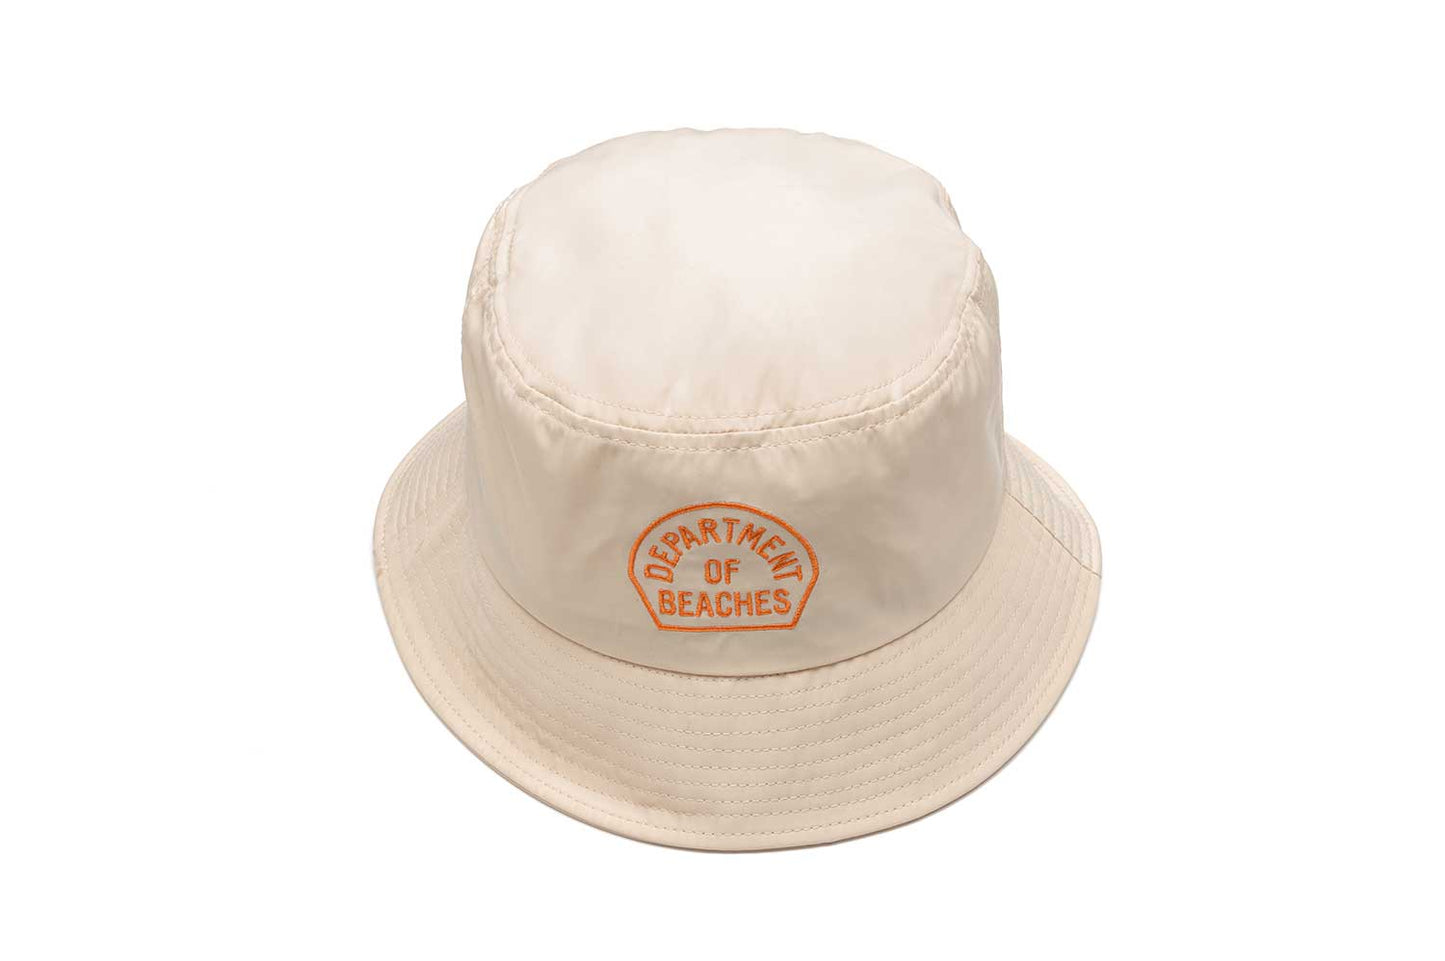 Dept of Beaches - Bucket Hat - Sandshell